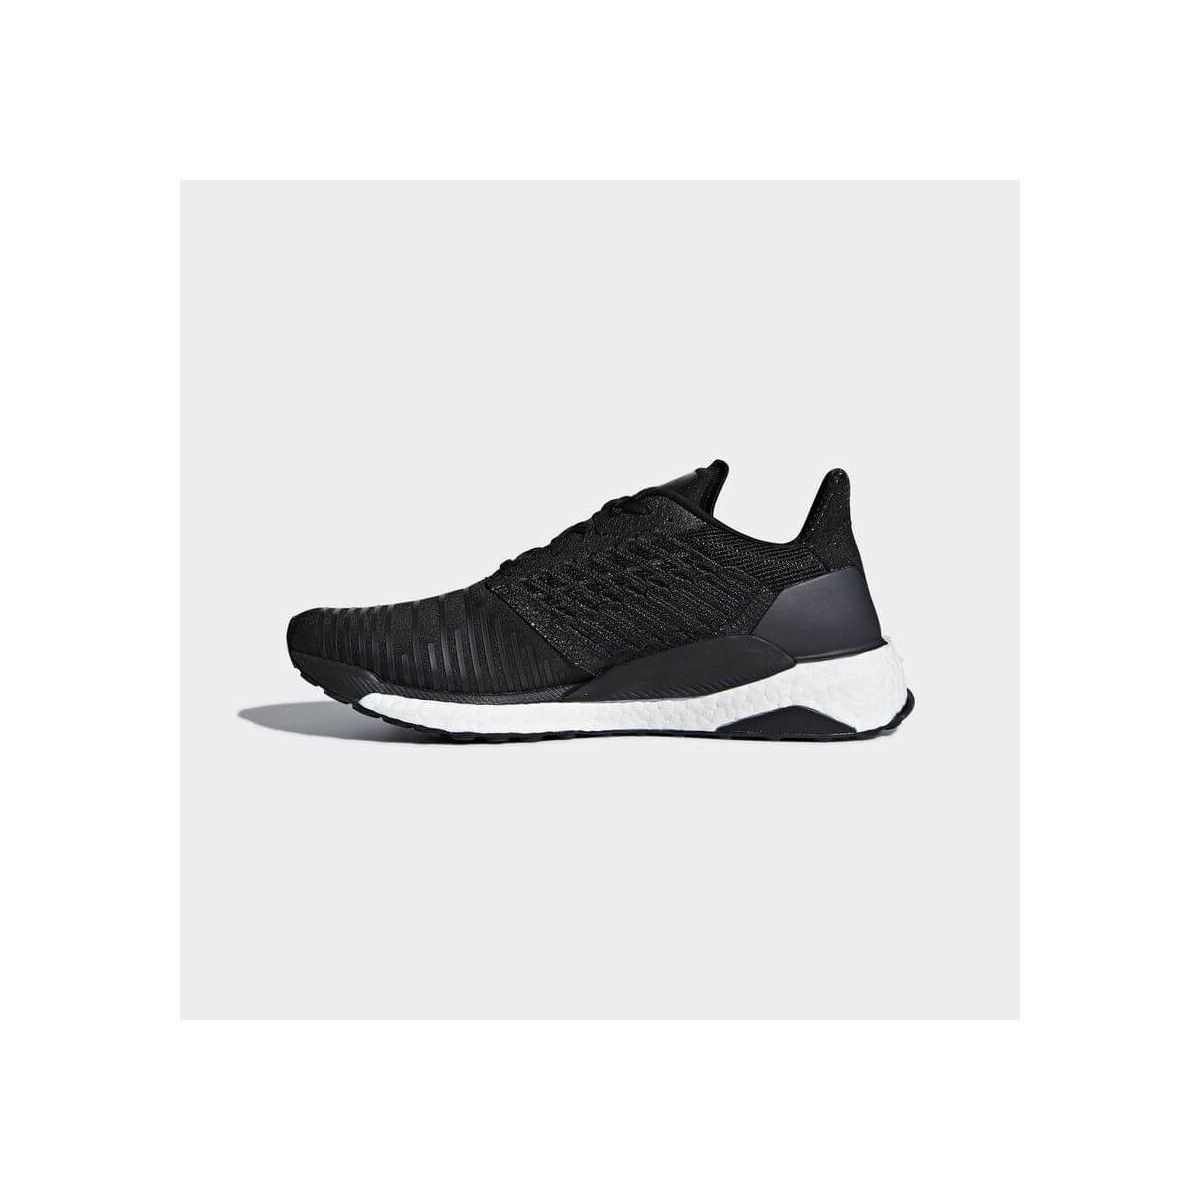 Elástico Oblea Ser amado Adidas Solar Boost Black Men's Running Shoes